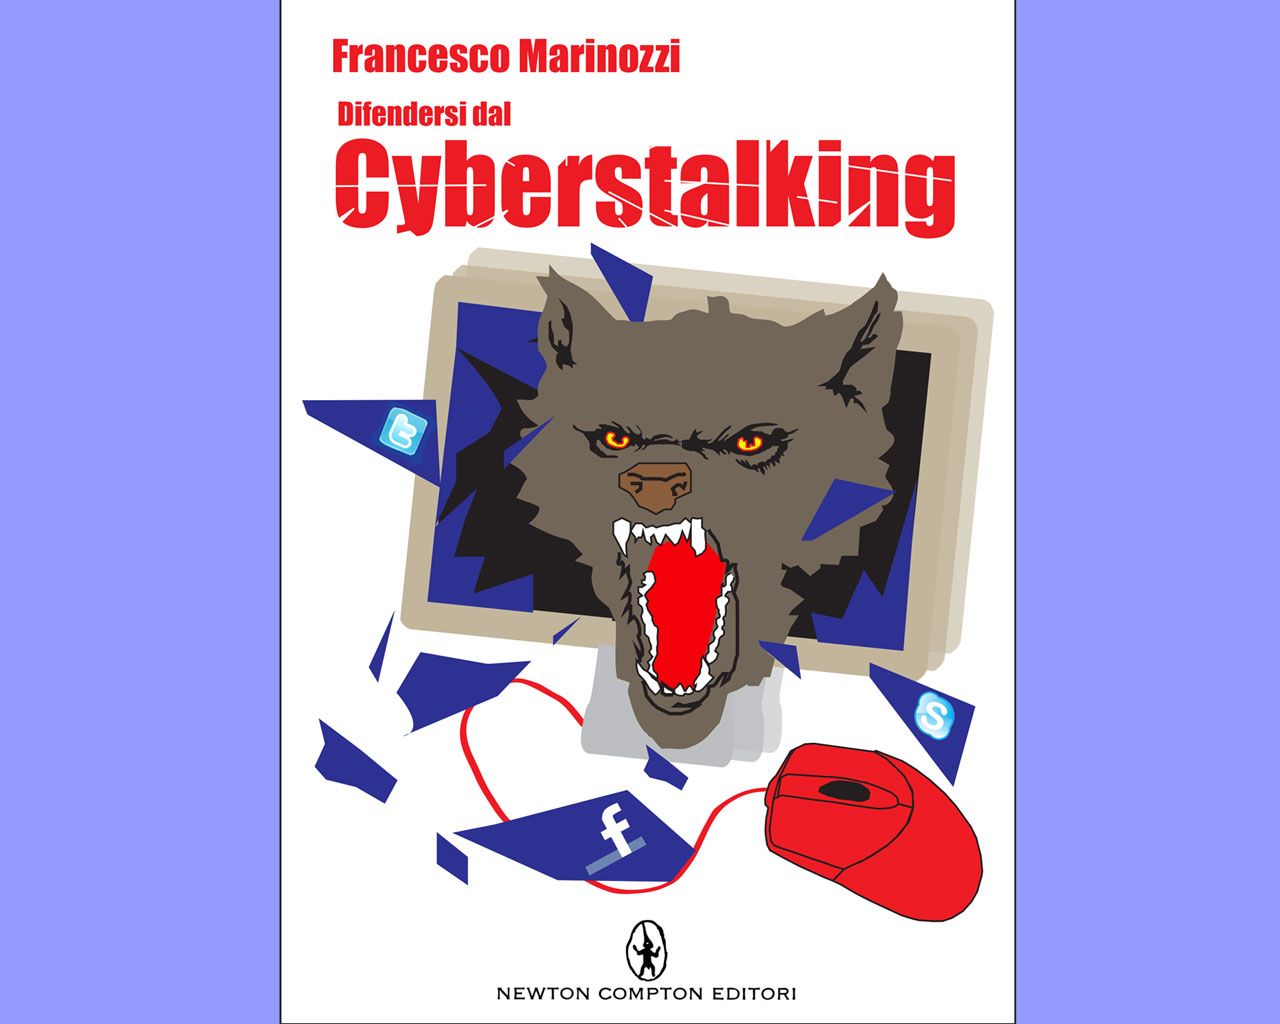 Copertina libro cyberstalking